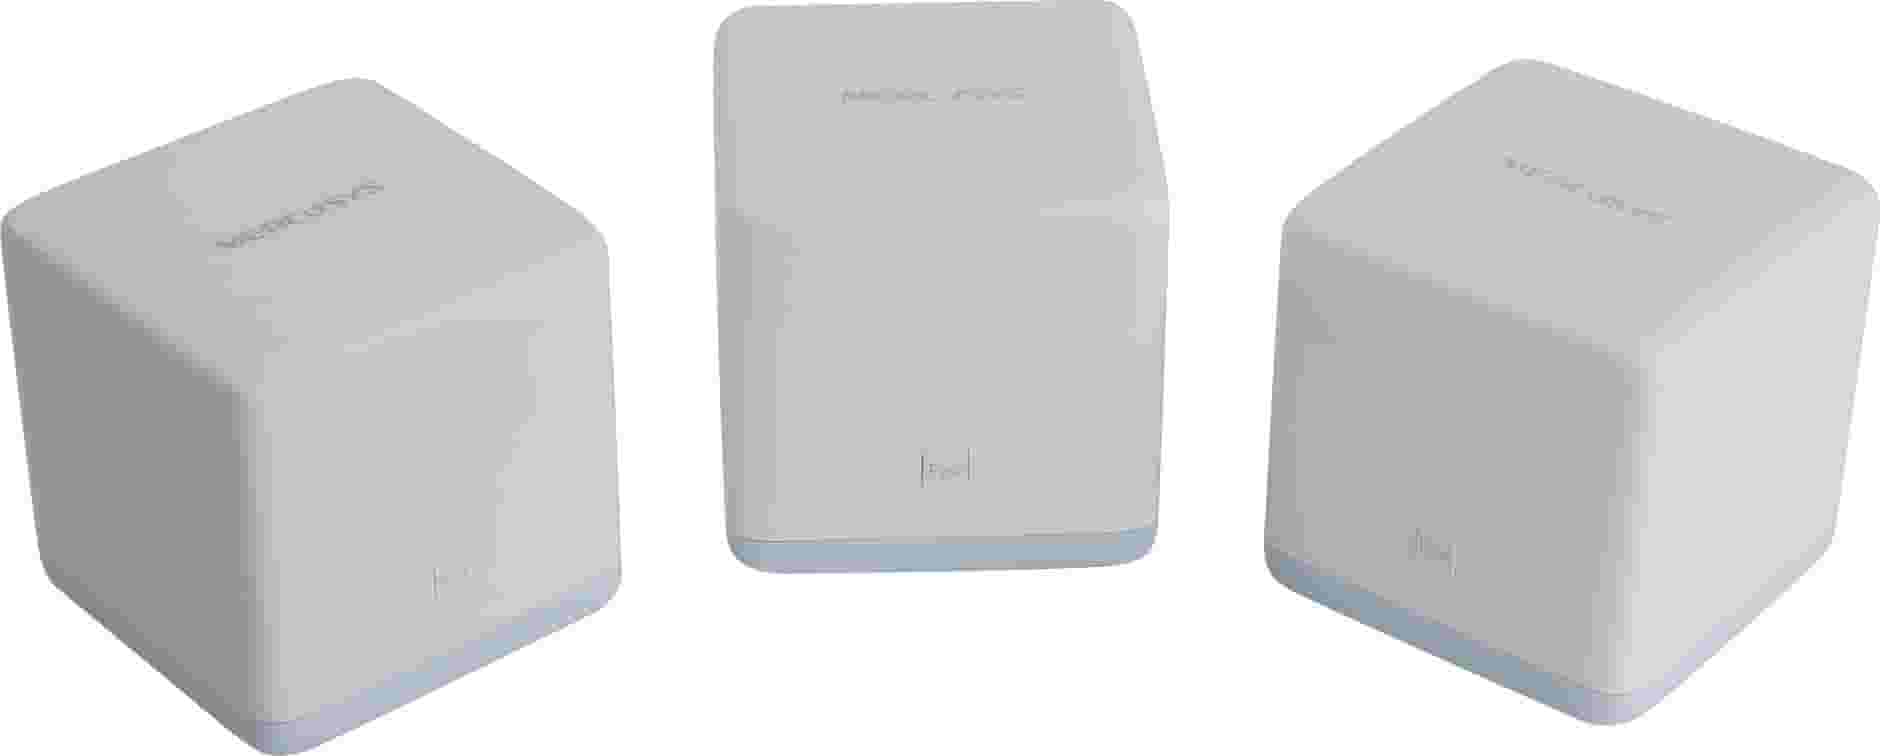 Mercusys HALO S12 (3-pack) AC1200 Домашняя Wi-Fi система-1